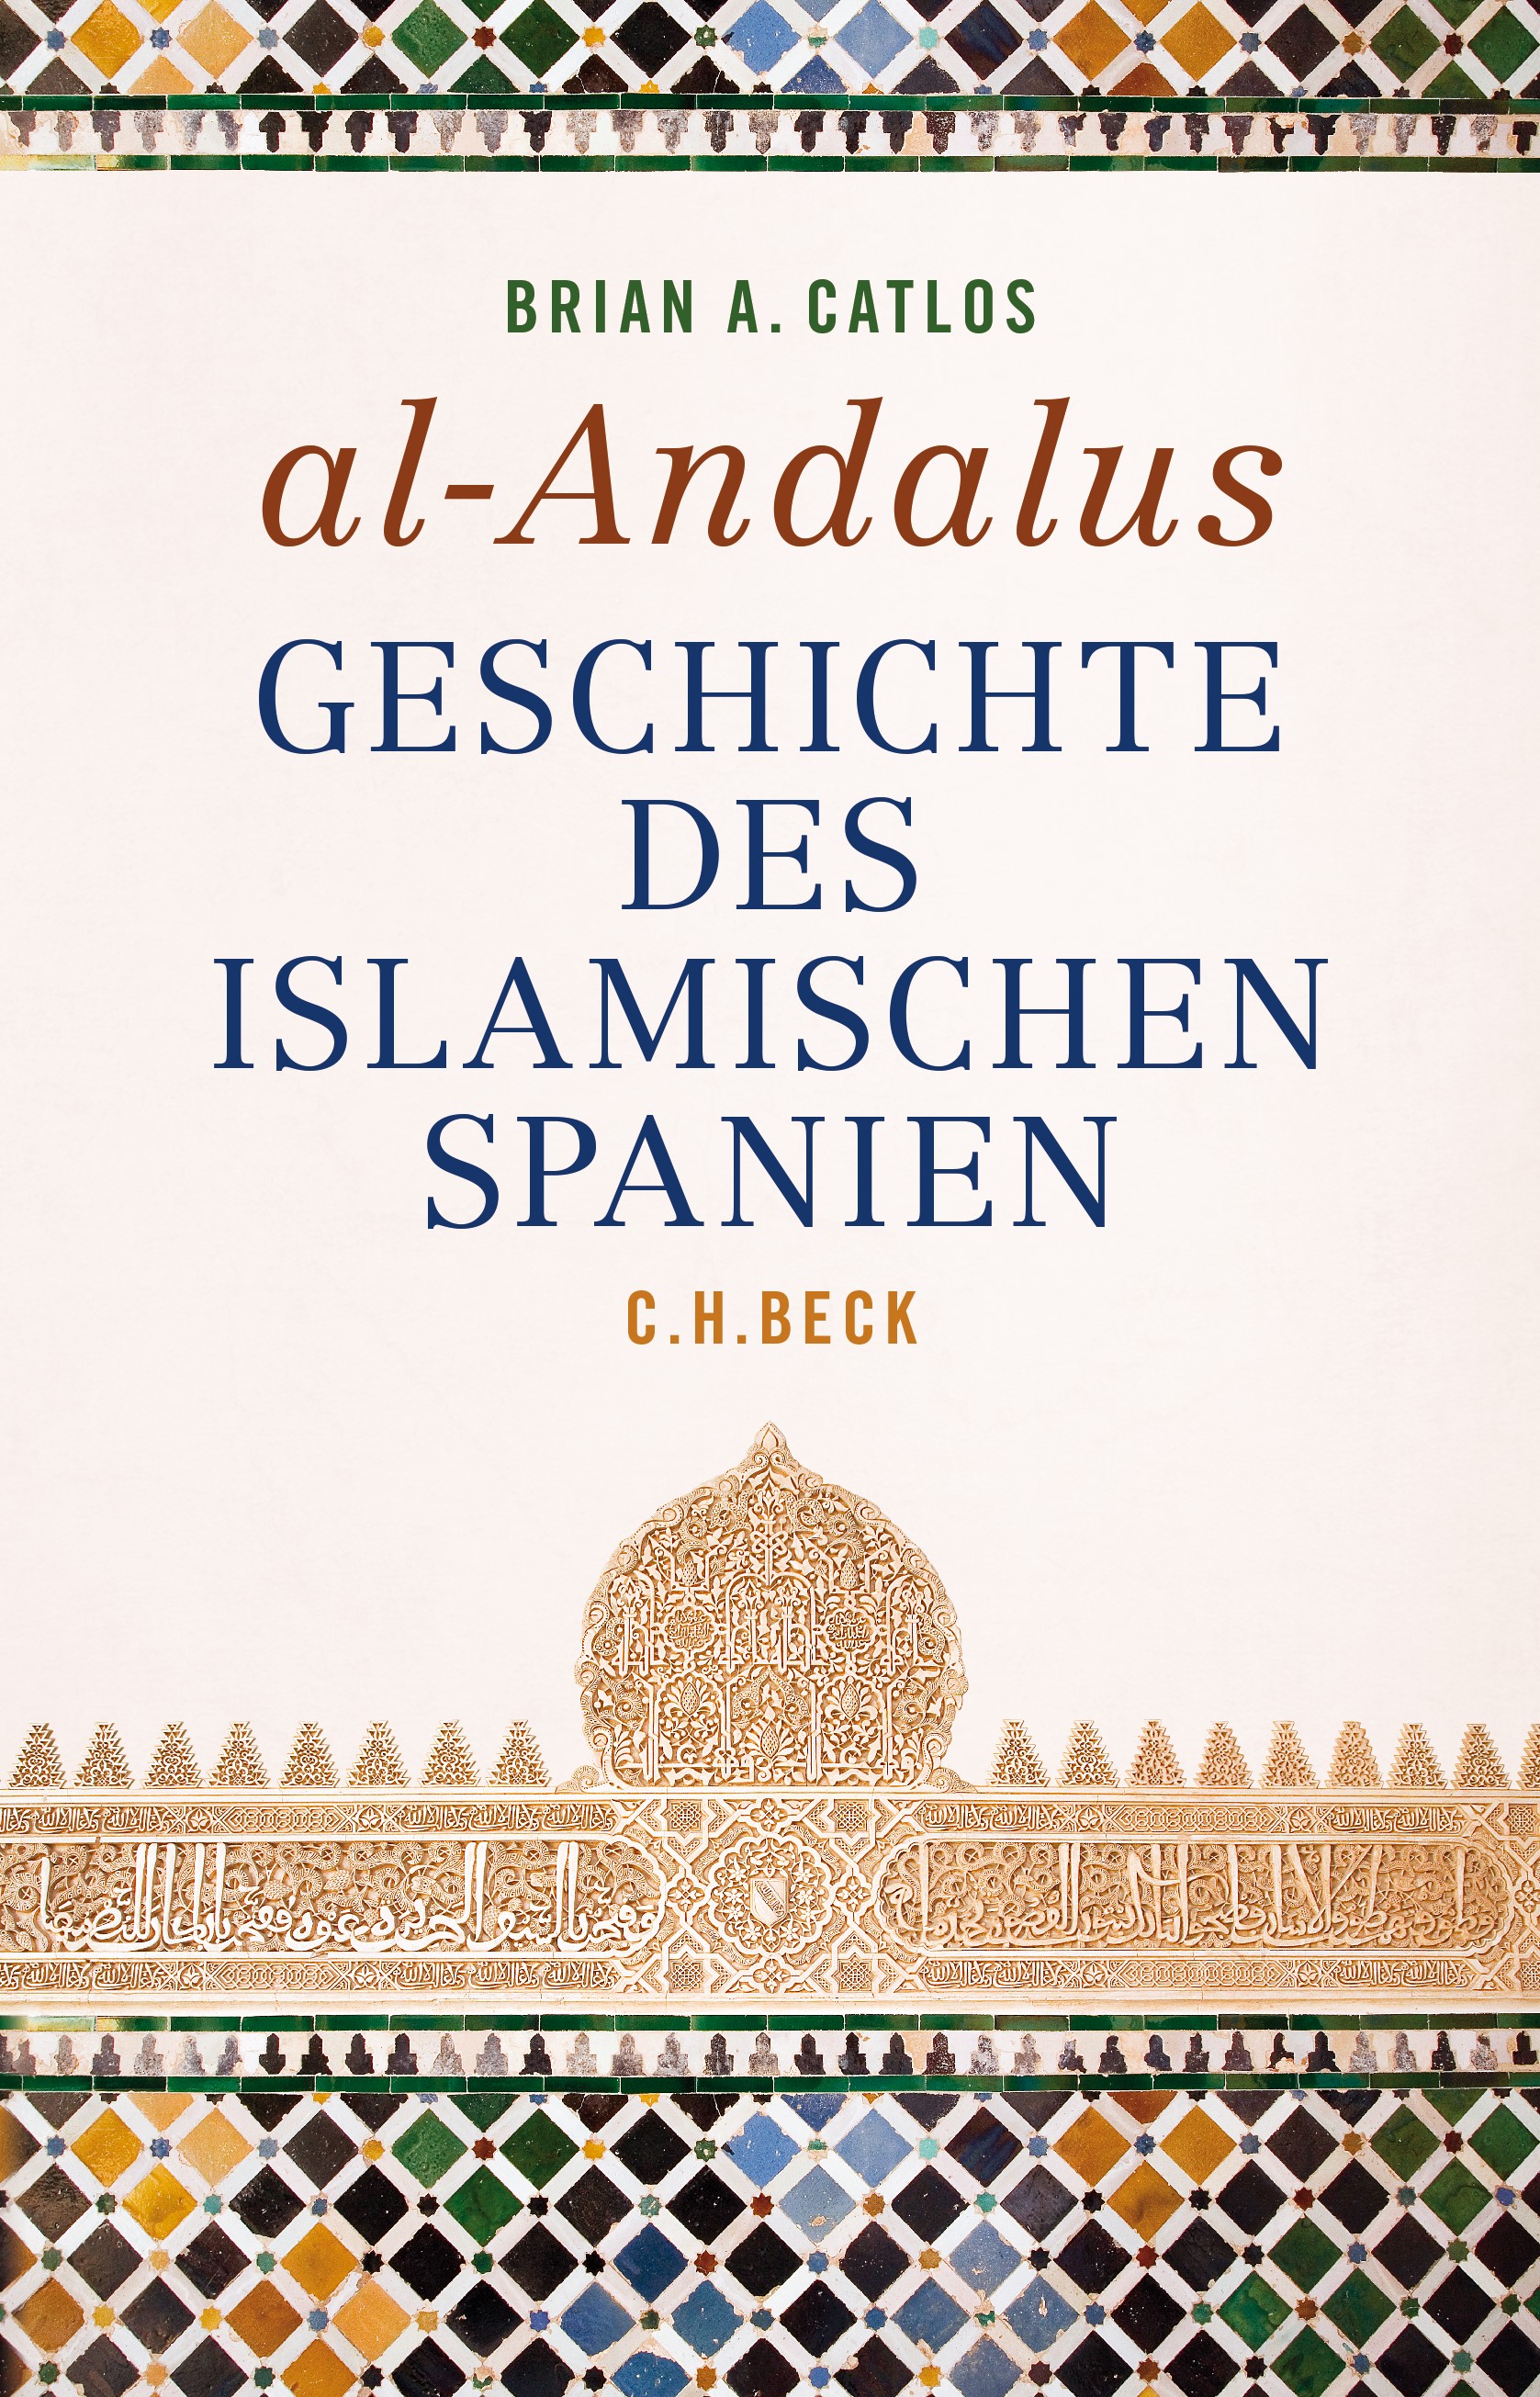 Cover: Catlos, Brian A., al-Andalus